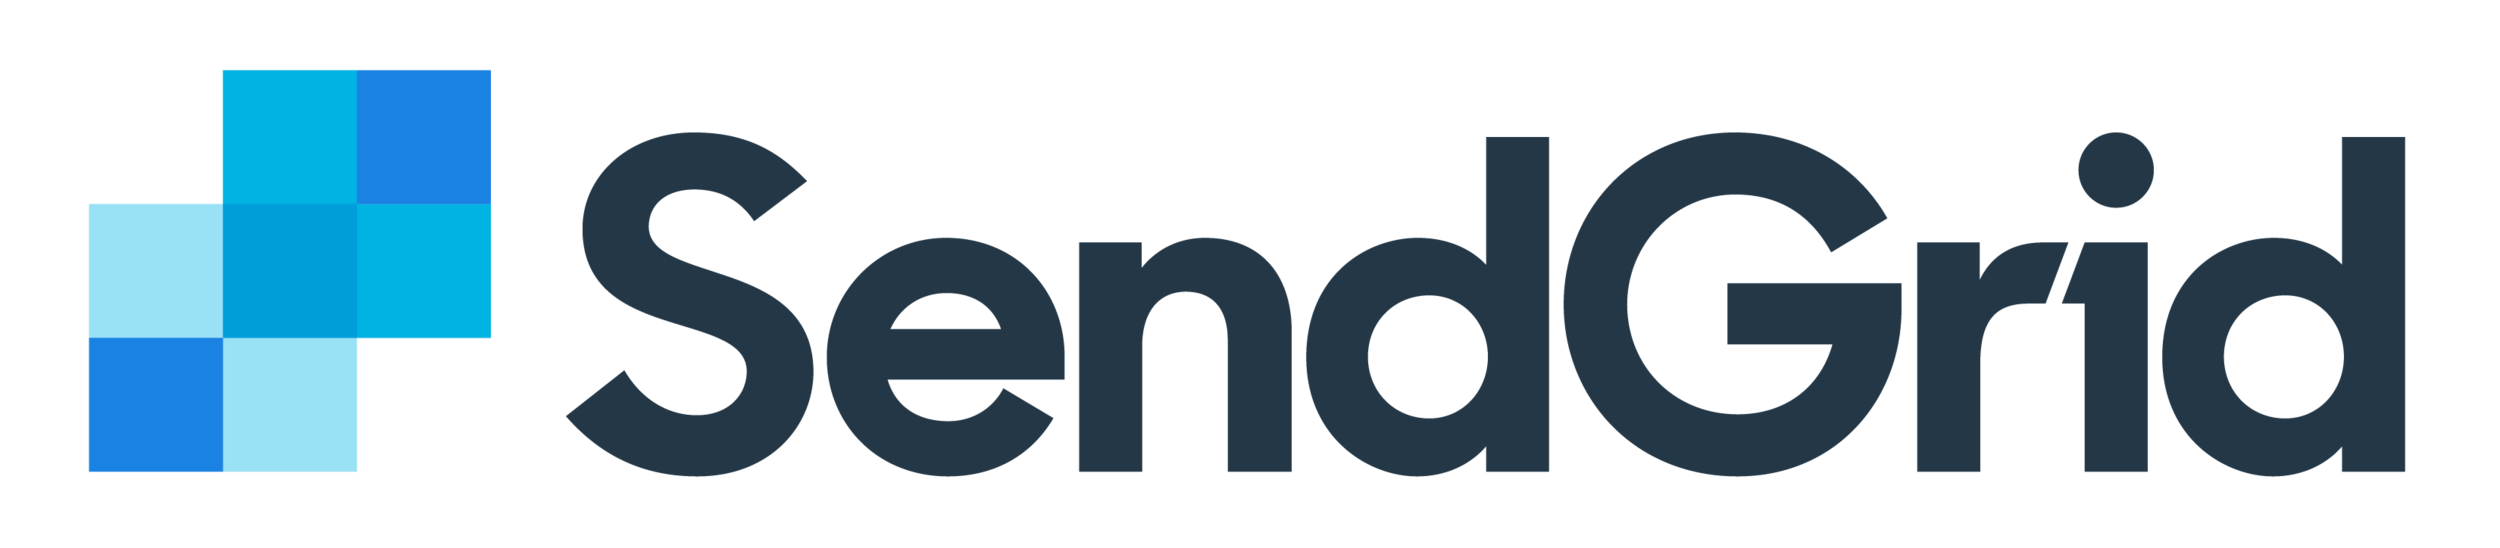 SendGrid-Logo.png